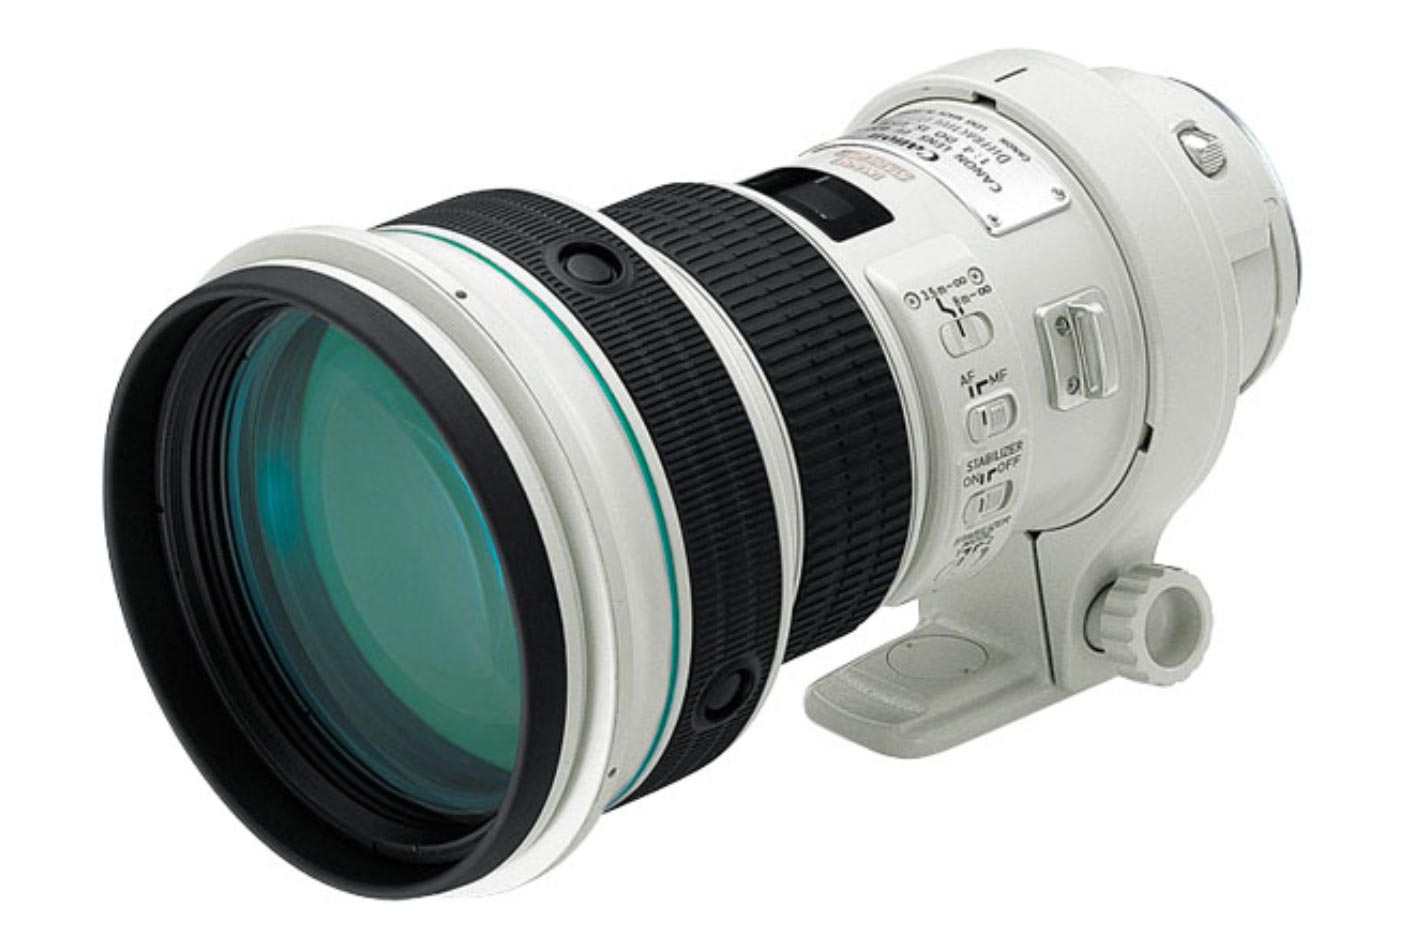 Canon’s milestone: 150 million RF and EF lenses produced